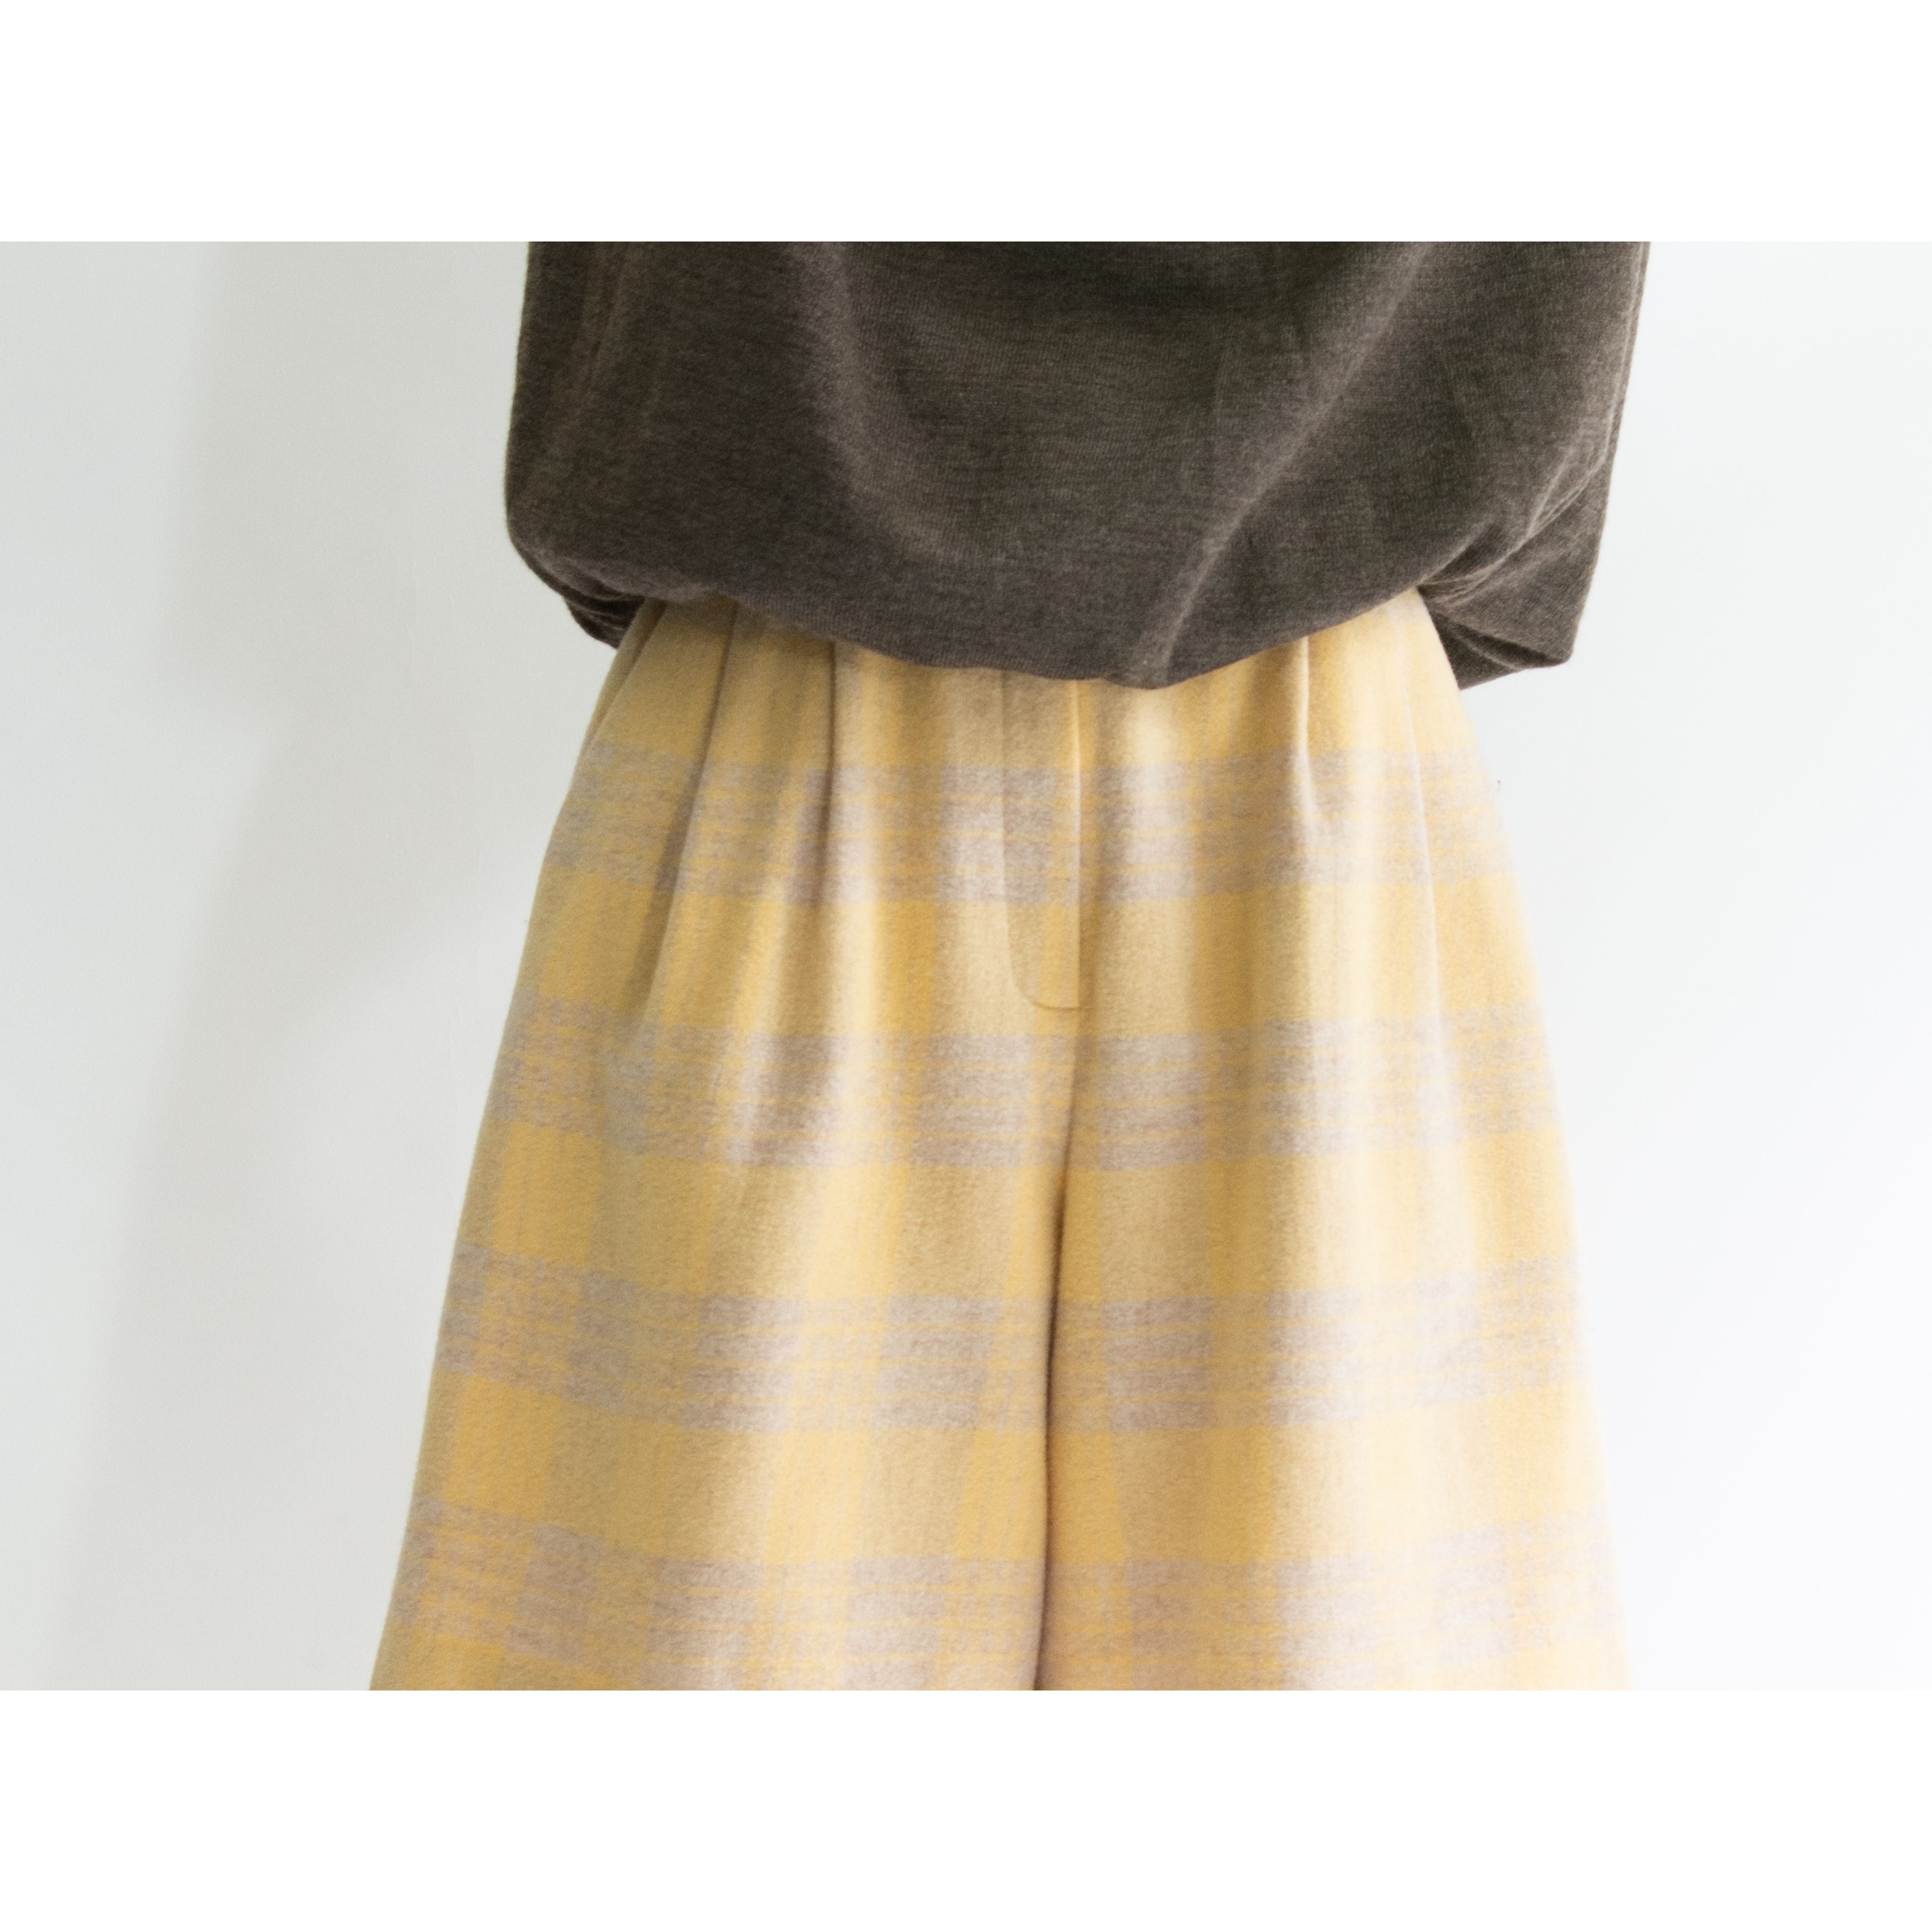 miss chloe】Made in Japan wool-nylon 2tuck check short pants